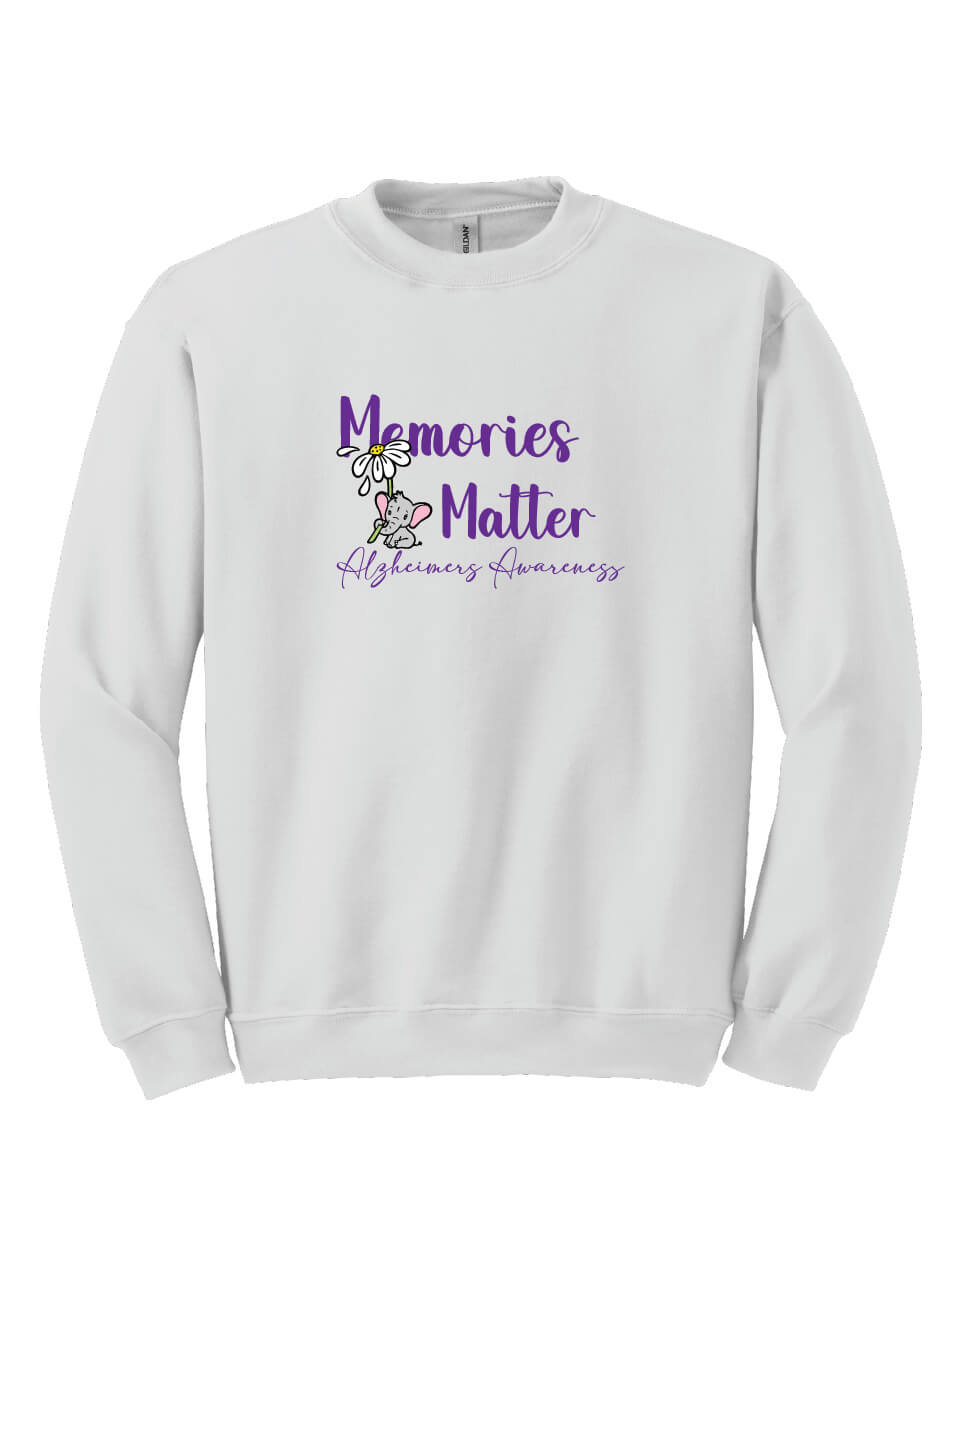 Memories Matter - Alzheimers Awareness Crewneck Sweatshirt white